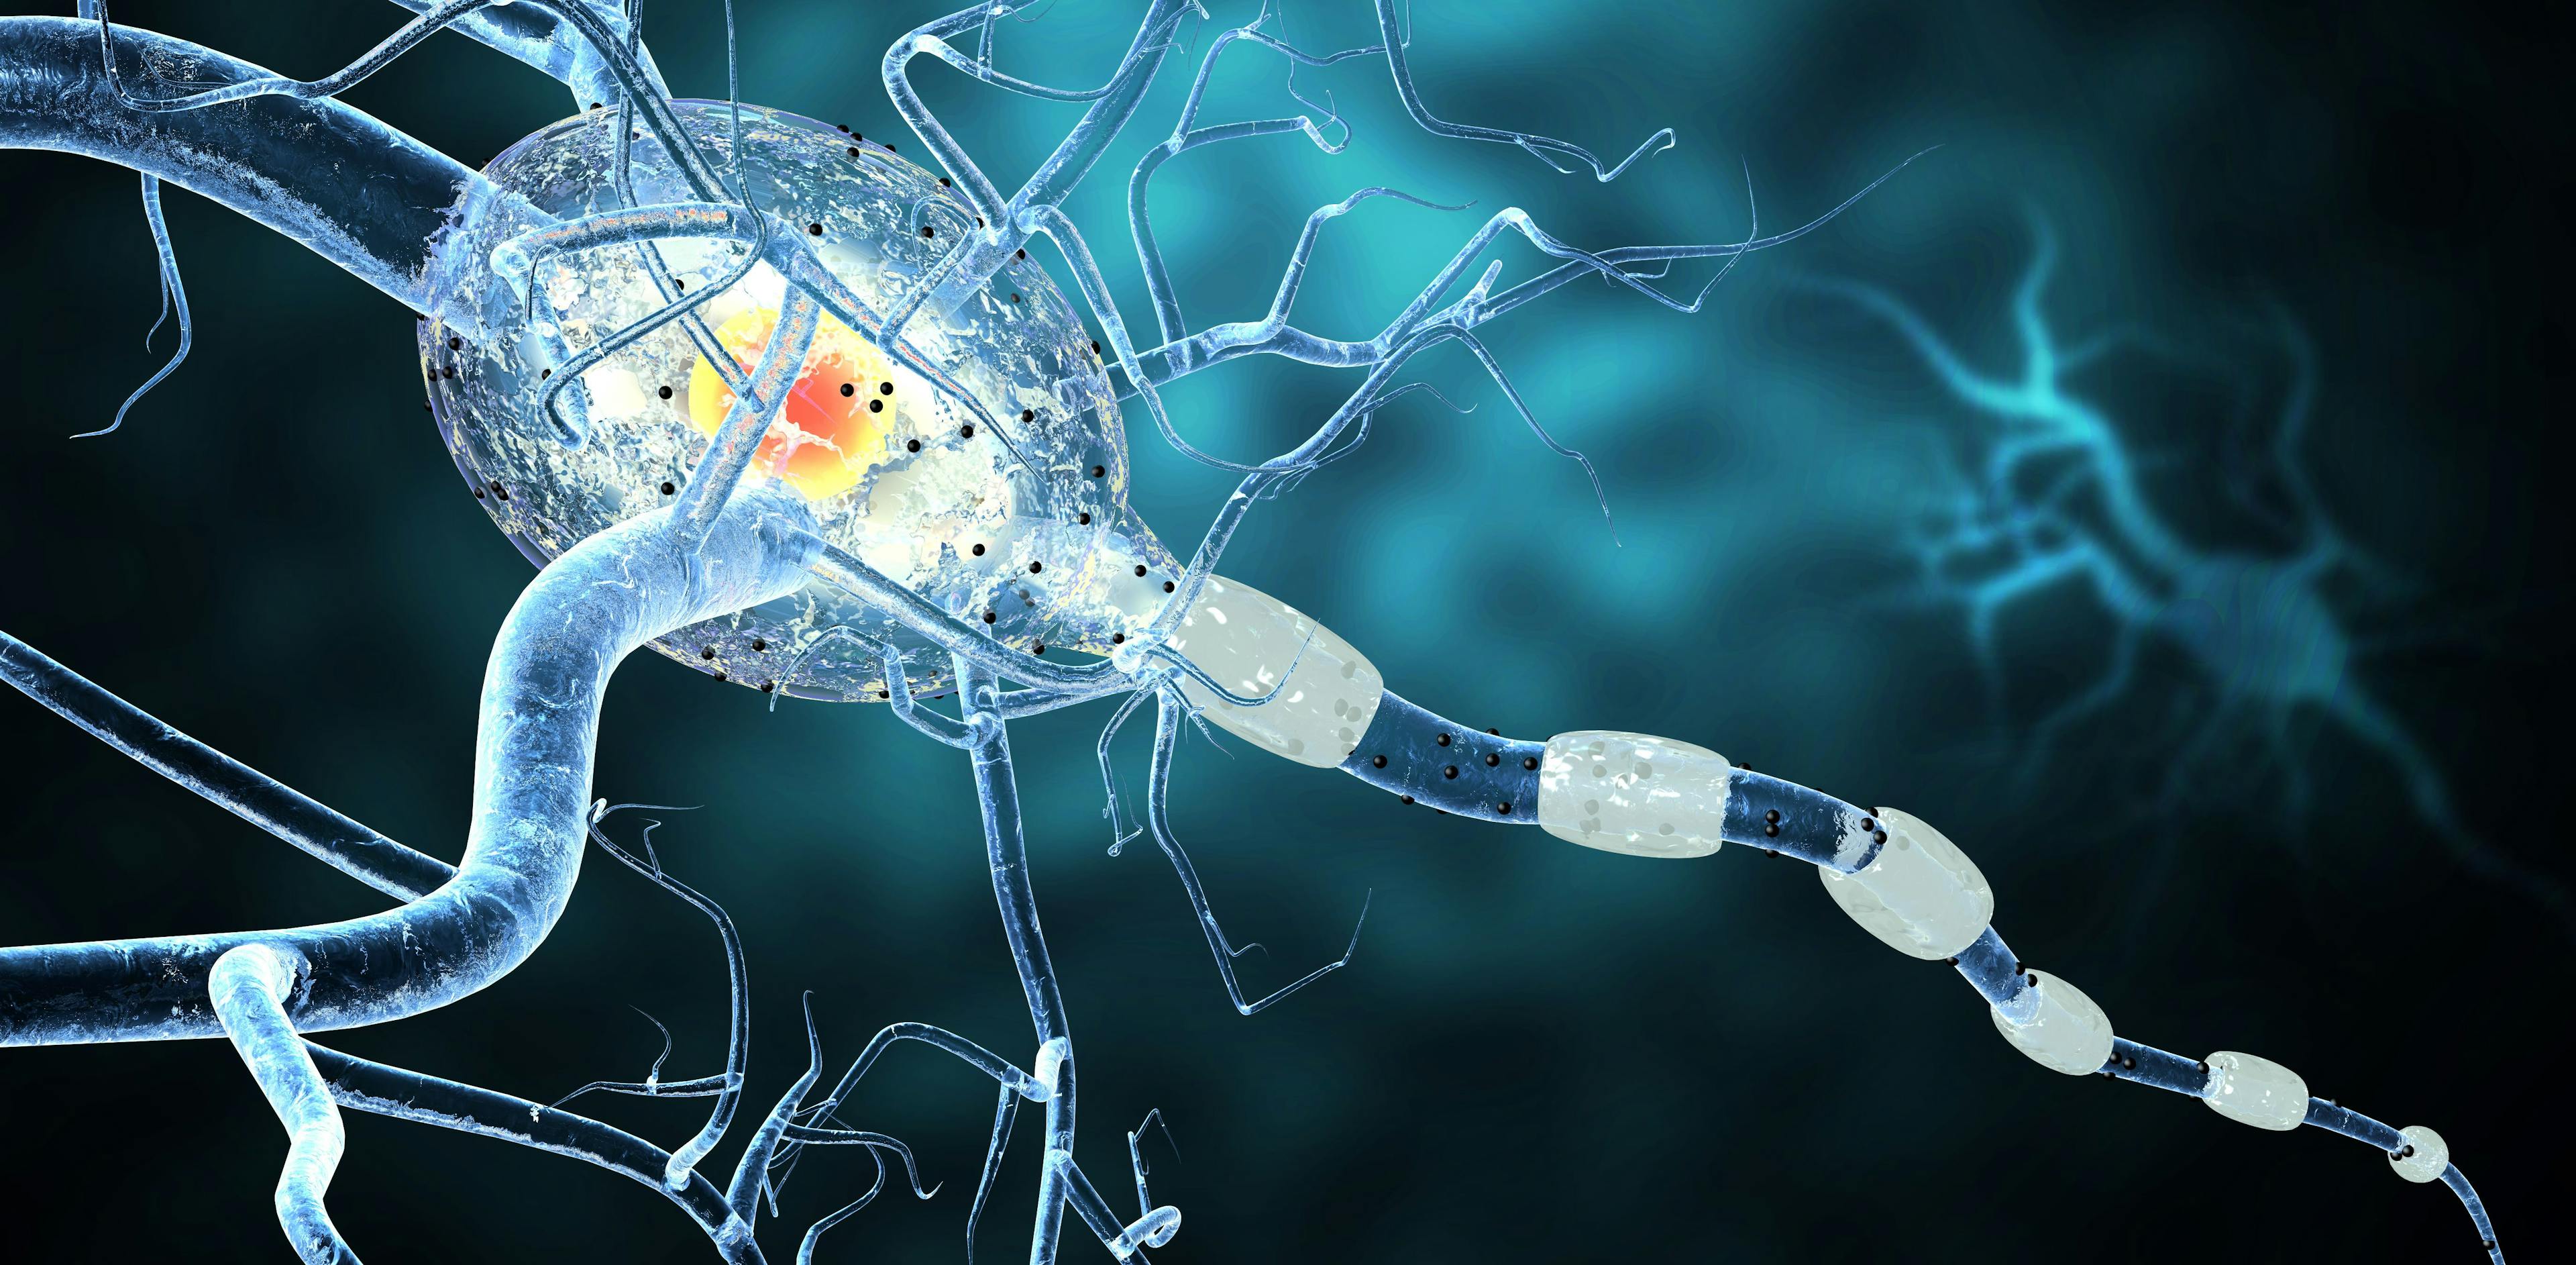 nerve cells, Neurologic Disease, tumors, brain surgery | Image Credit: ralwel - stock.adobe.com